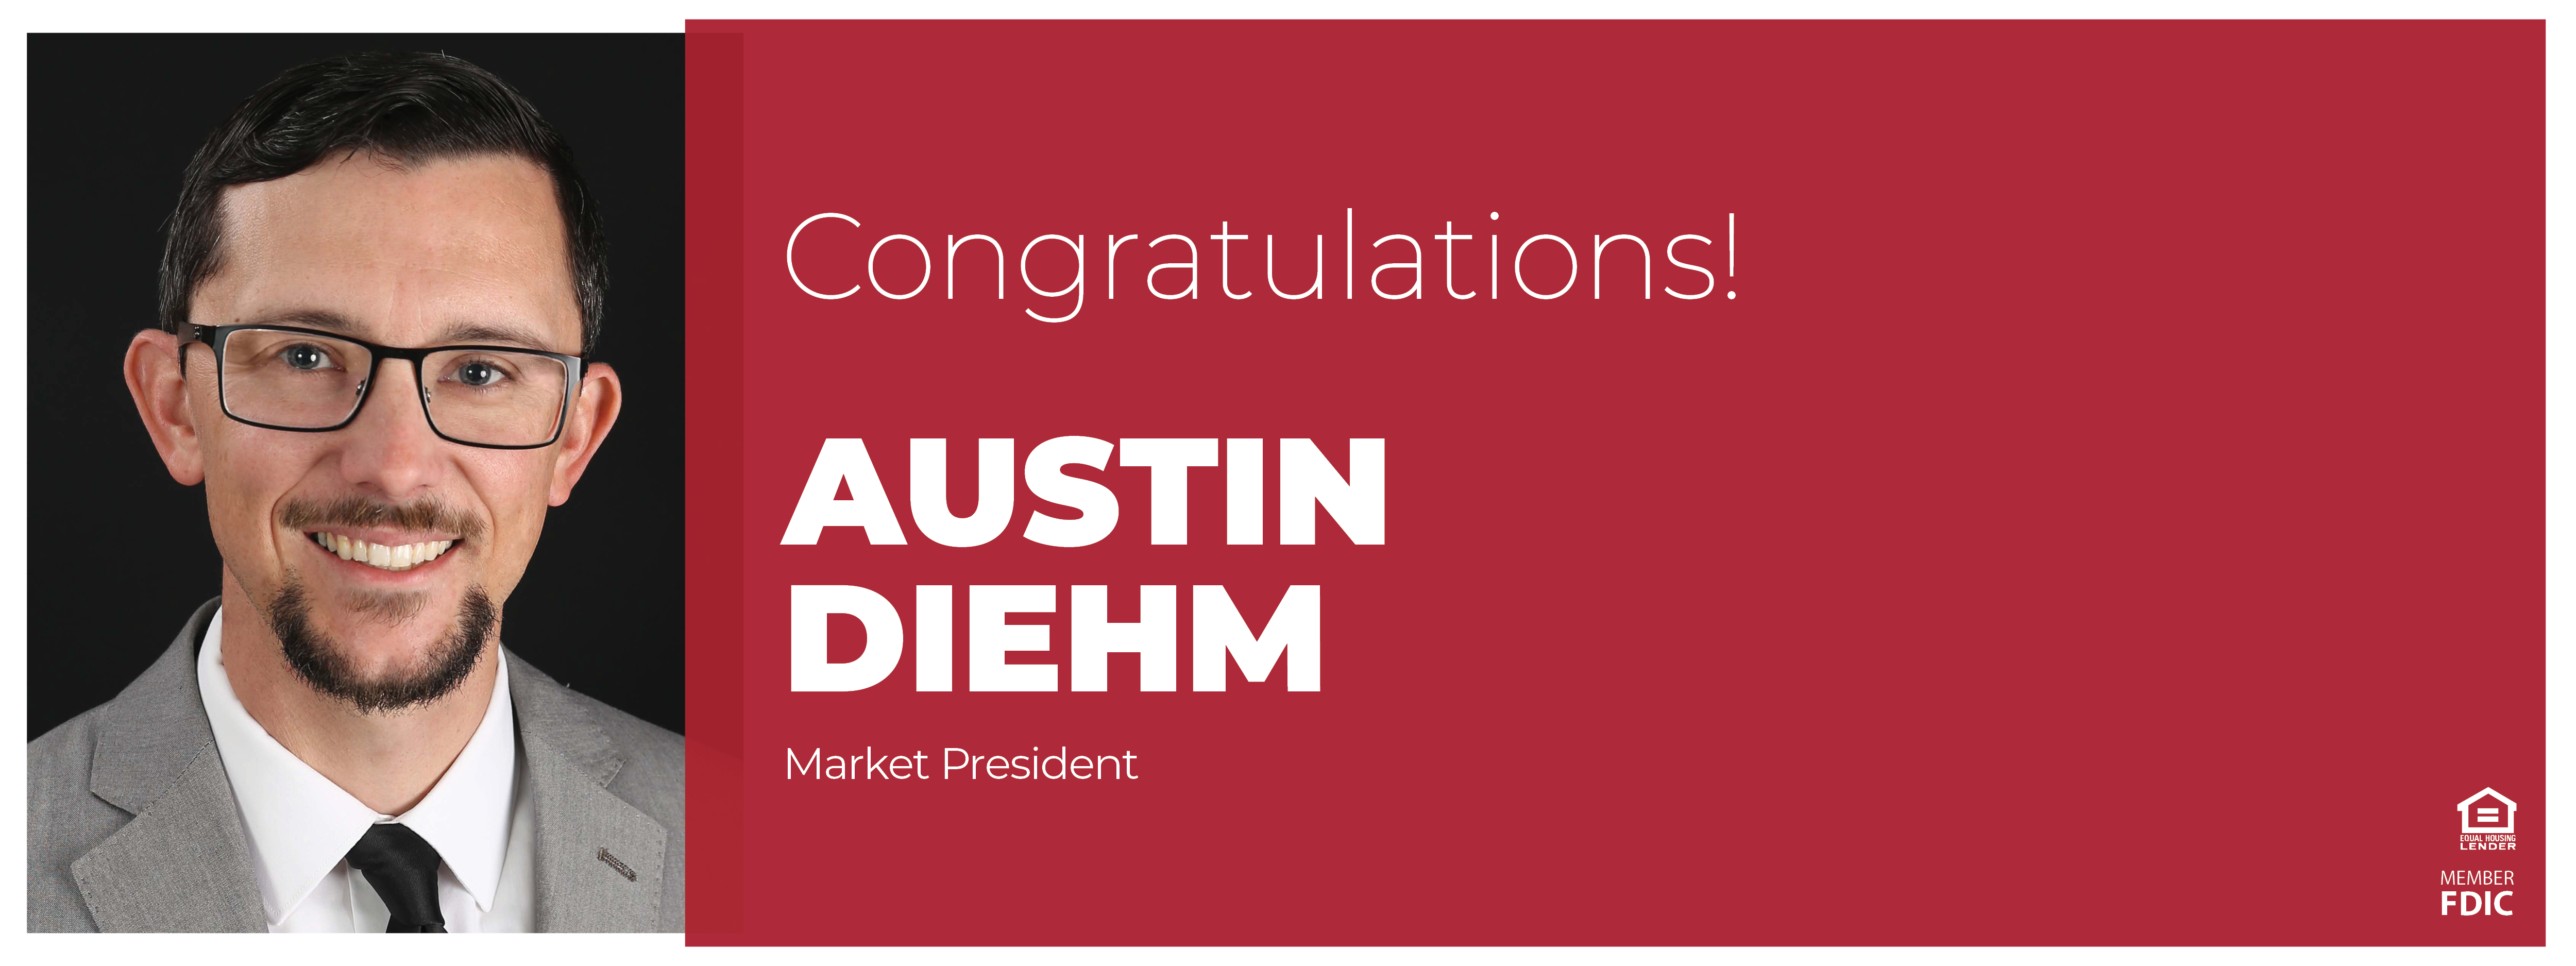 Congratulations Austin Diehm, Market President